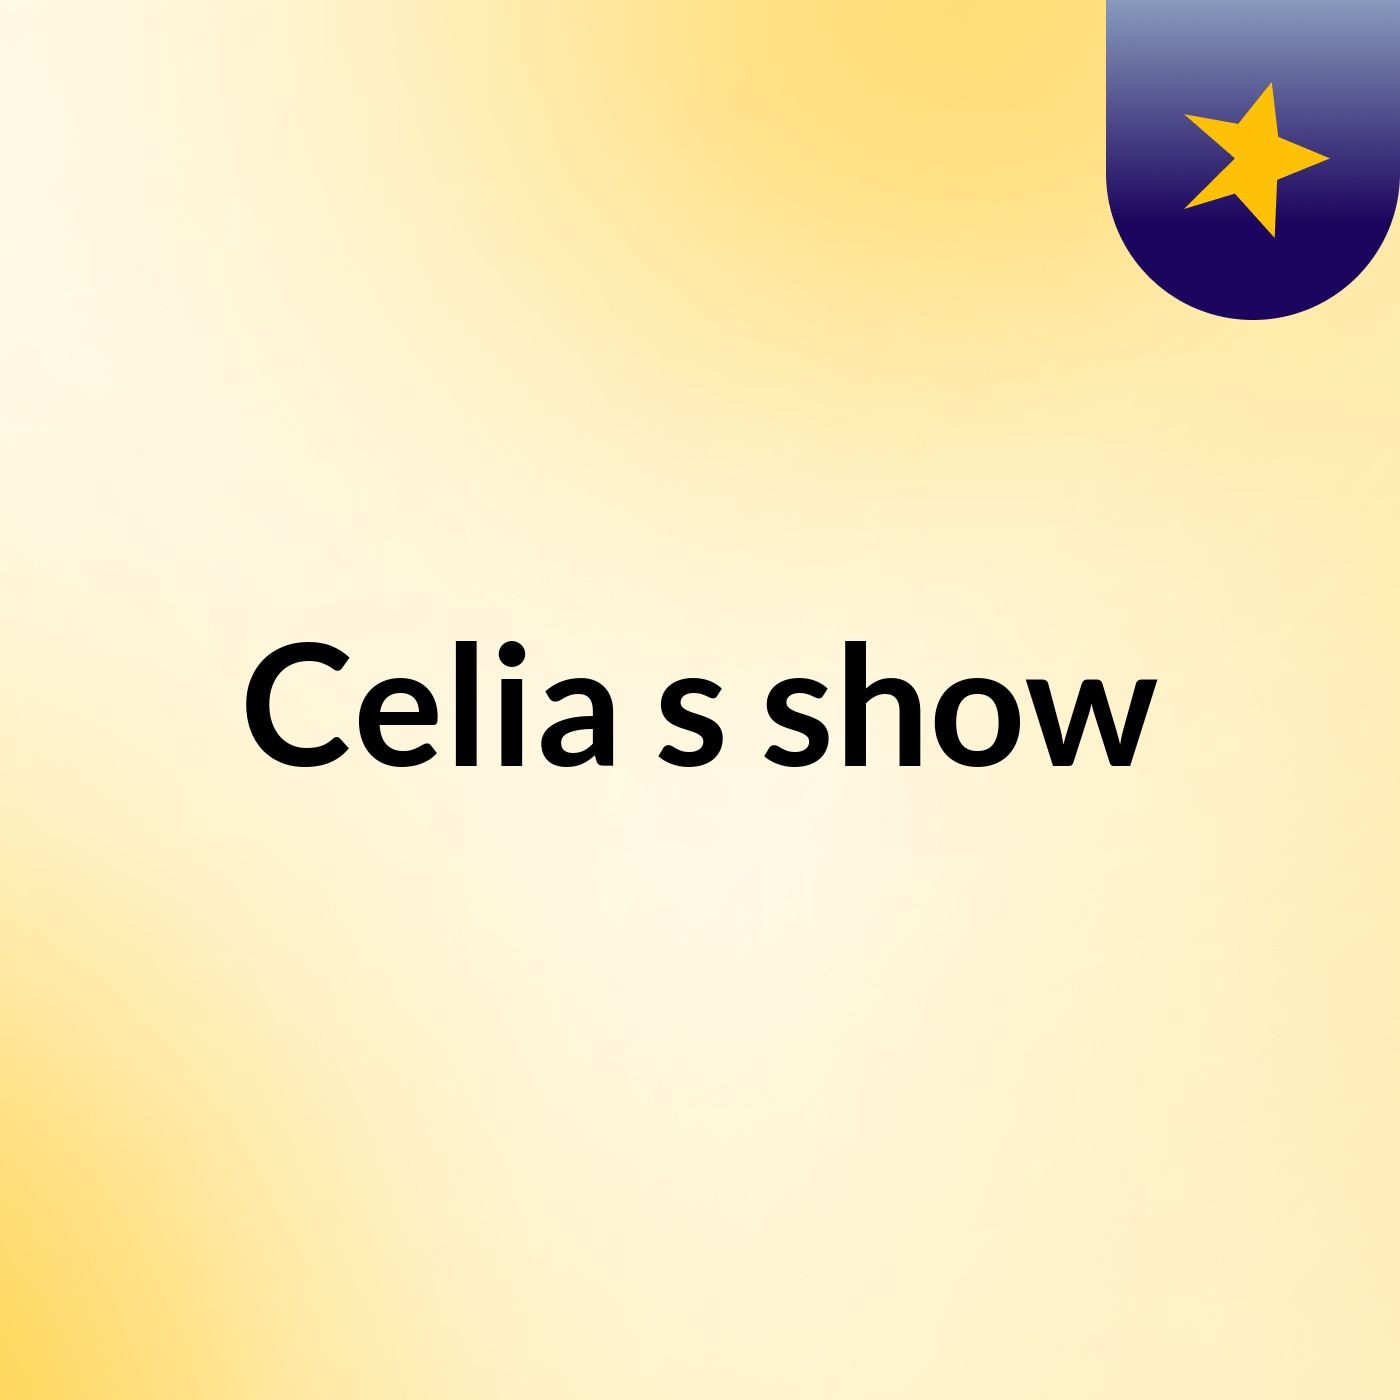 Celia's show